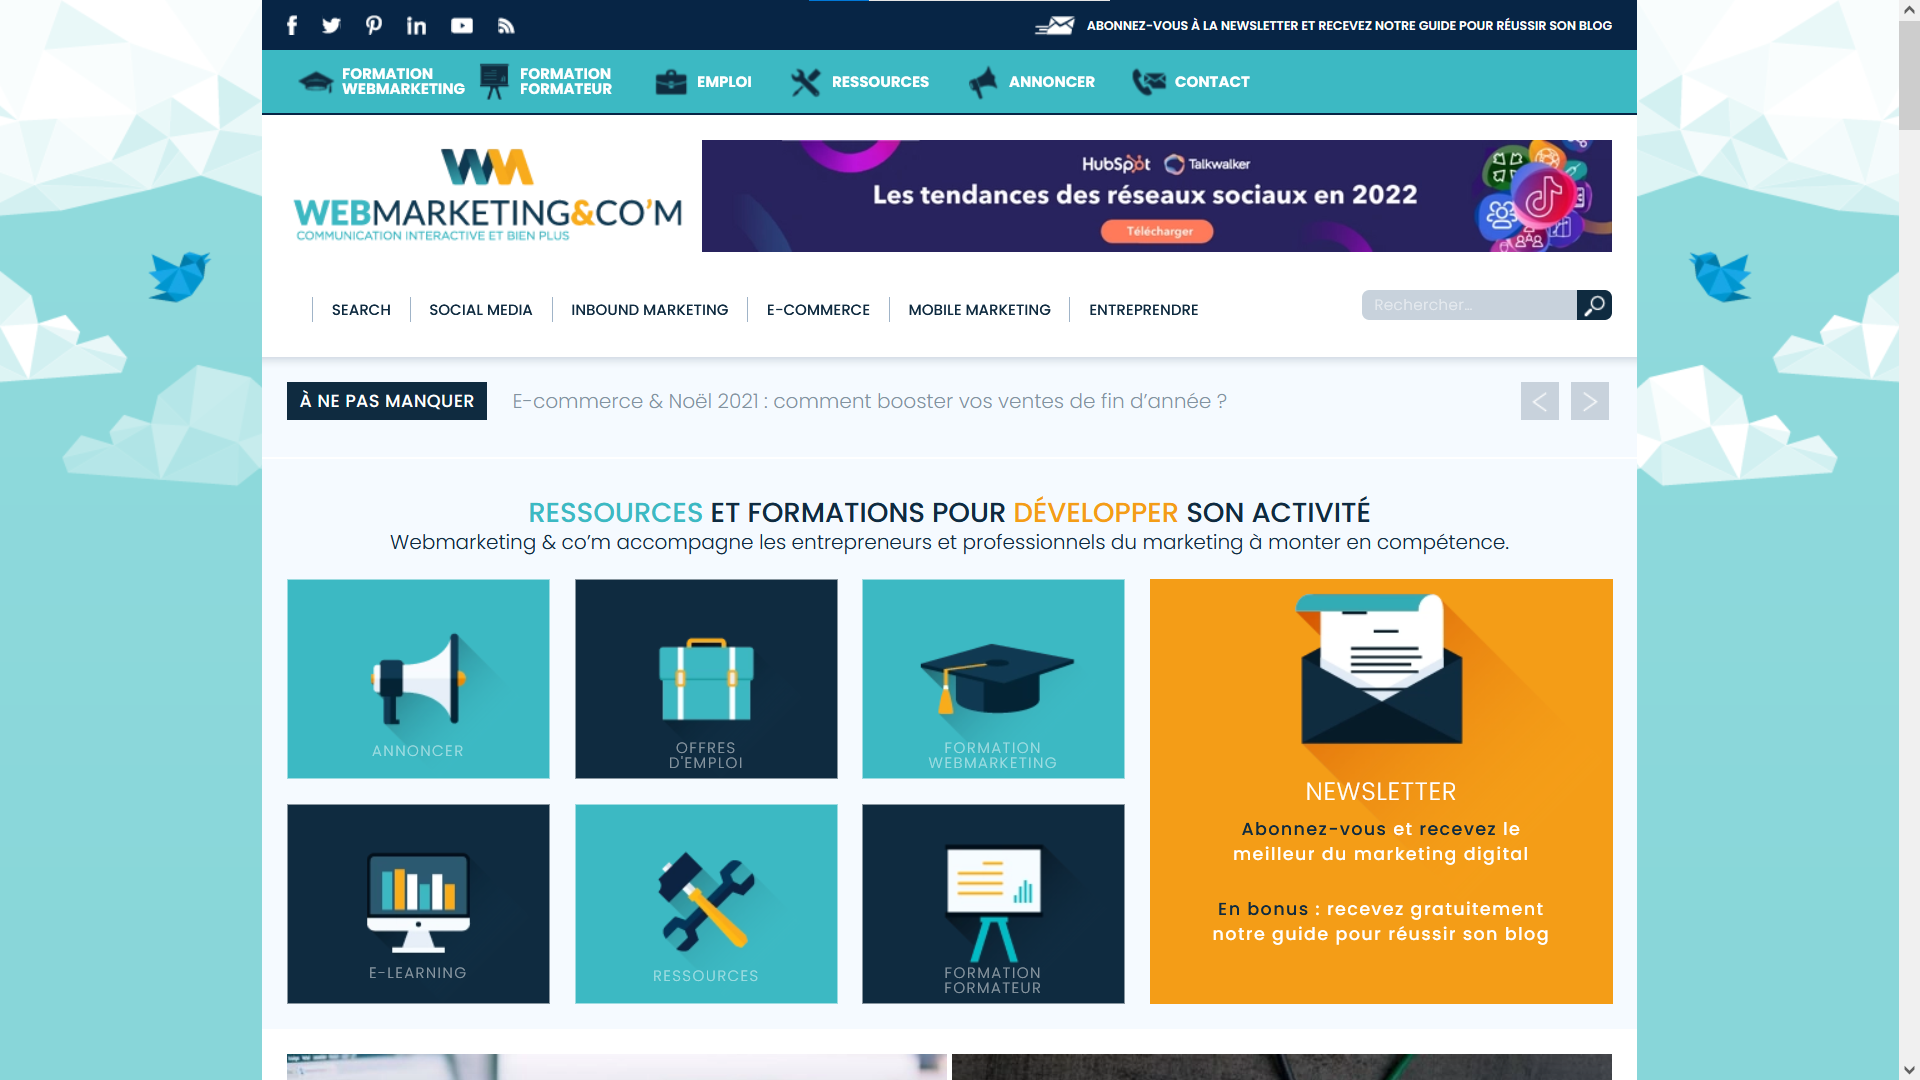 Webmarketing & Co'm